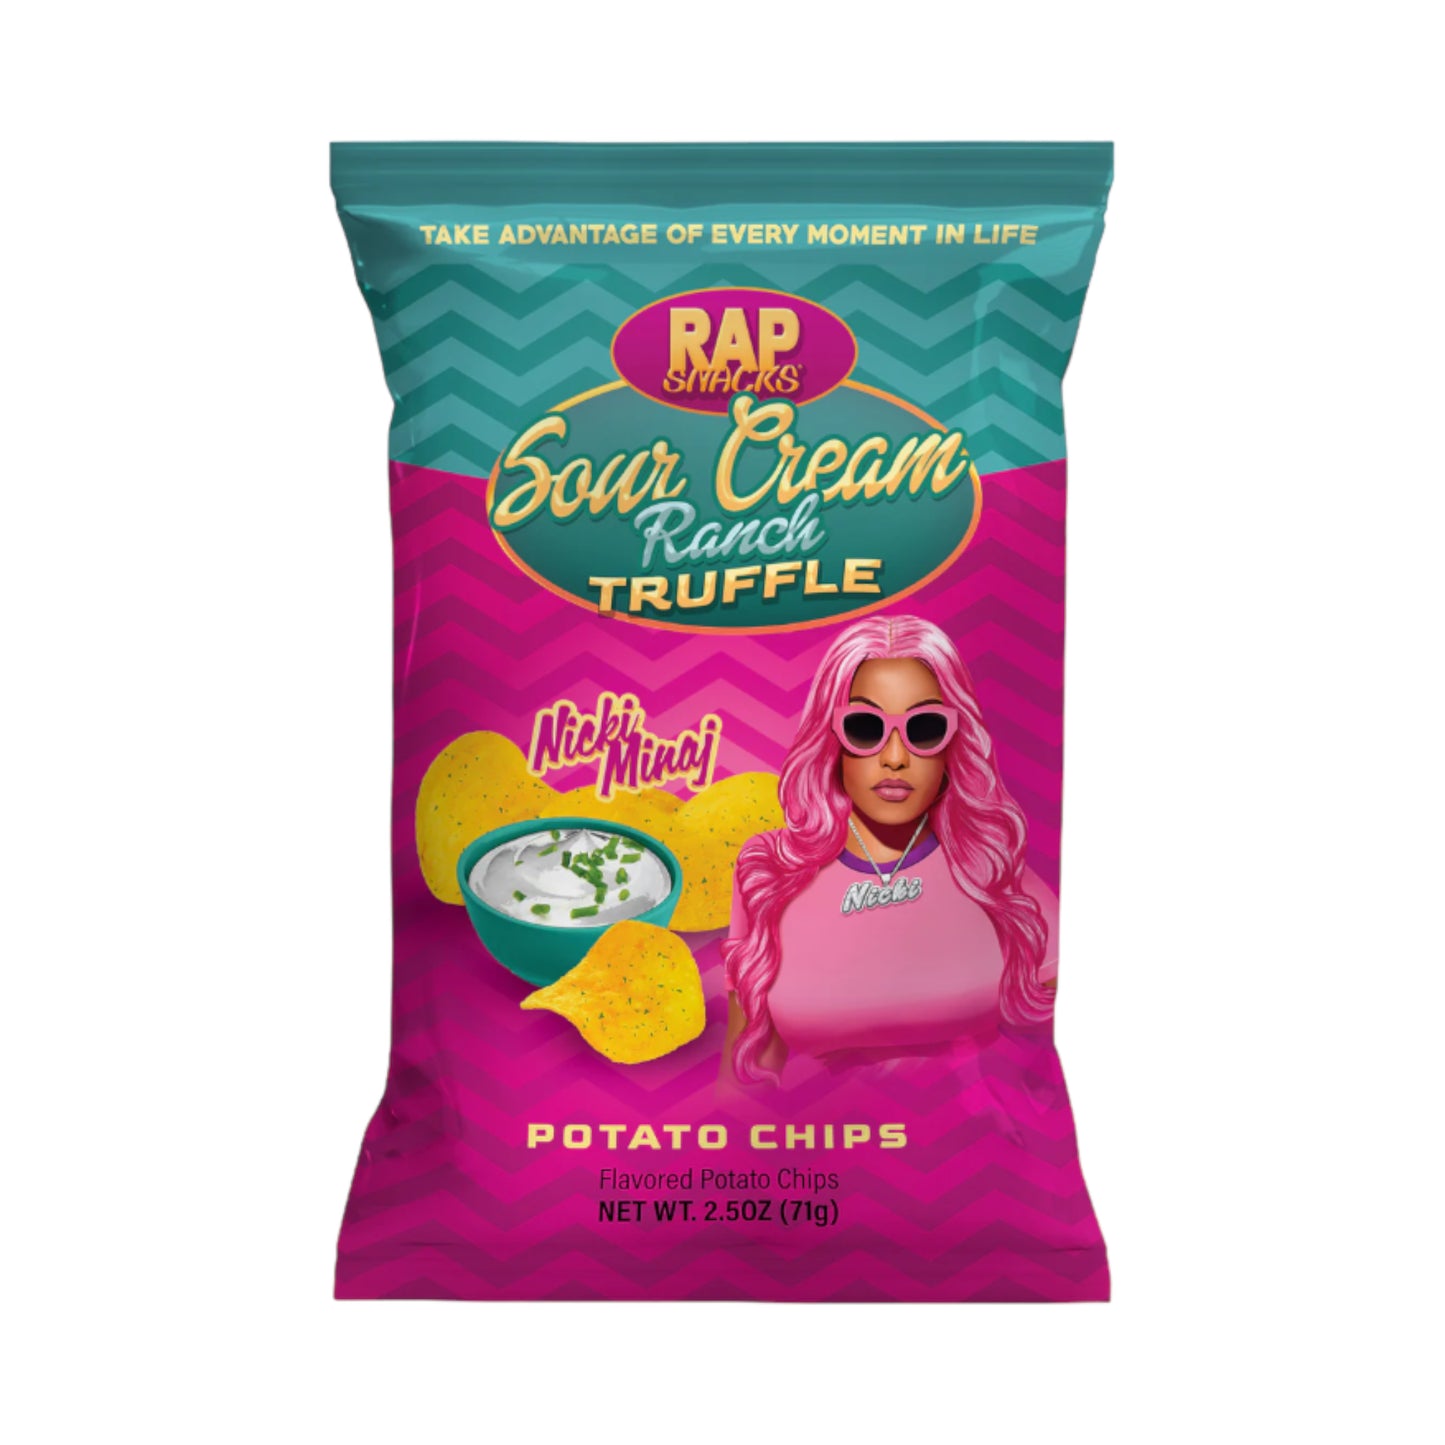 Rap Snacks Nicki Minaj Sour Cream Ranch Truffle - 2.5oz (71g)